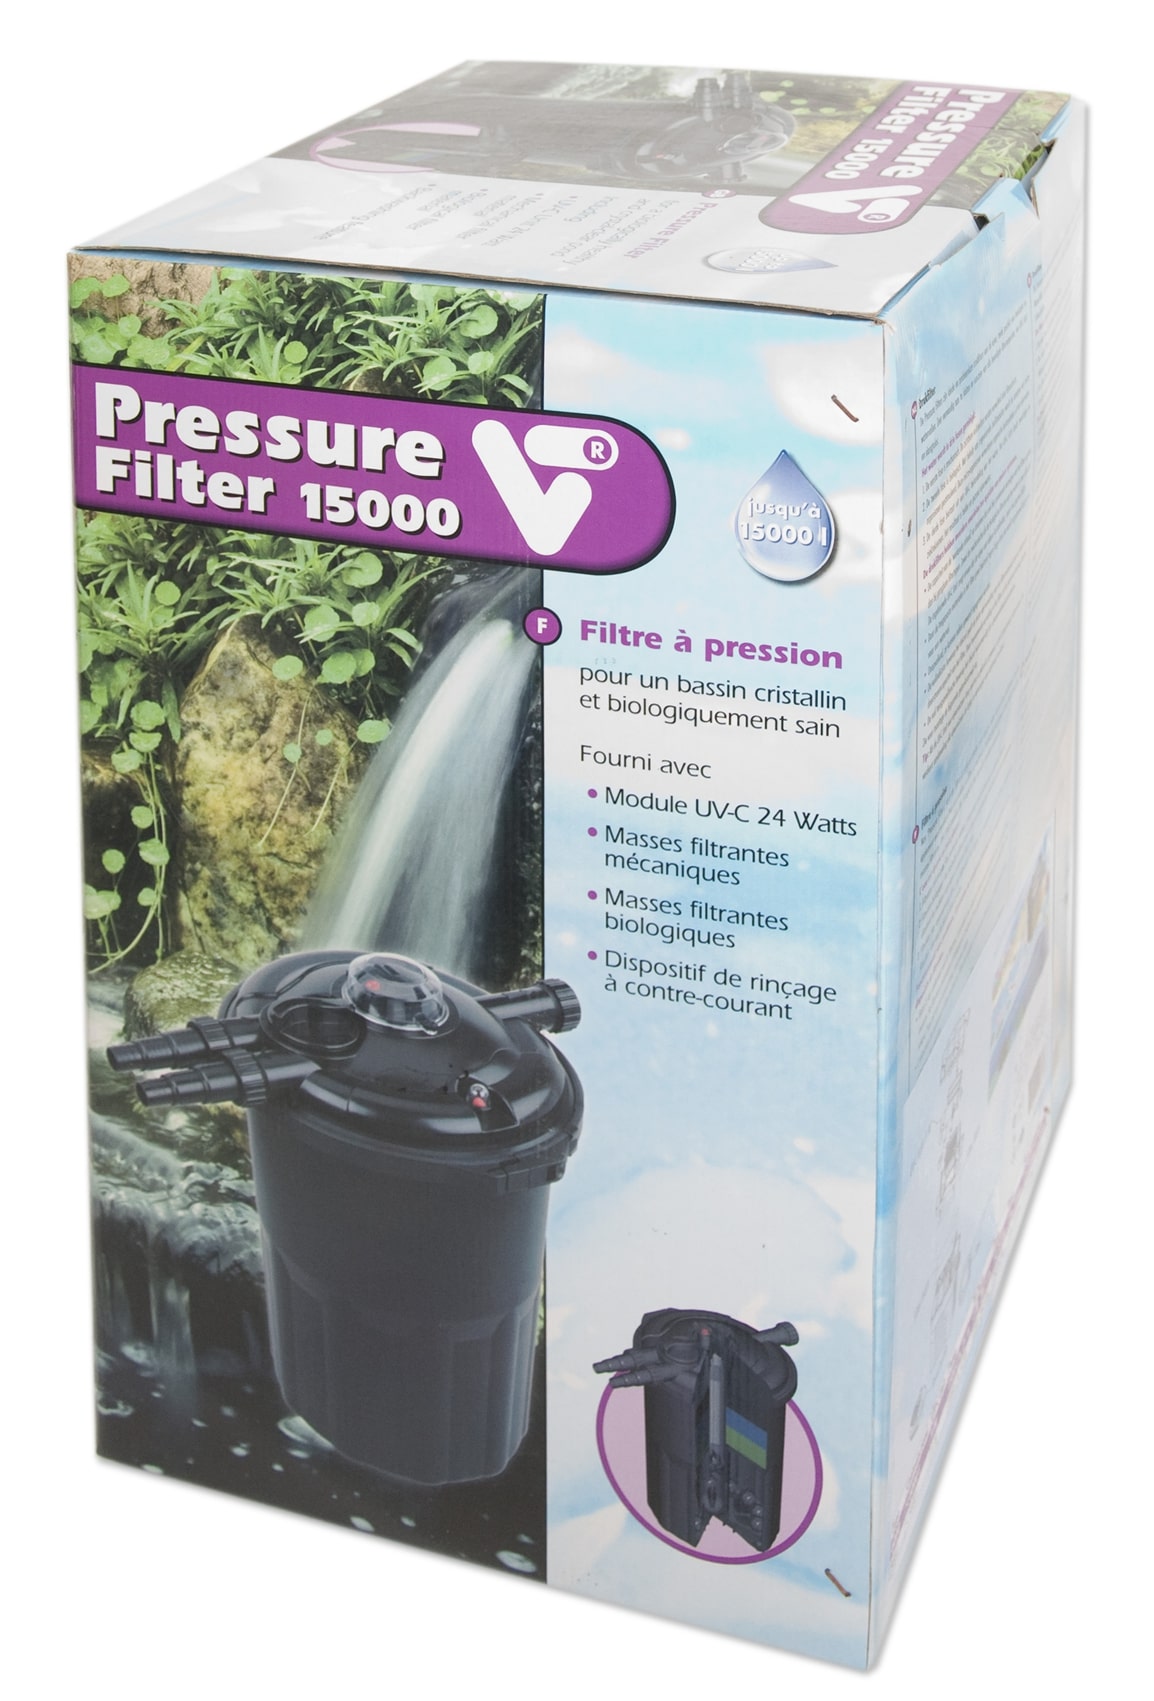 vt-pressure-filter-15000-filtre-a-pression-avec-sterilisateur-uv-c-24w-pour-bassin-jusqu-a-15000-l